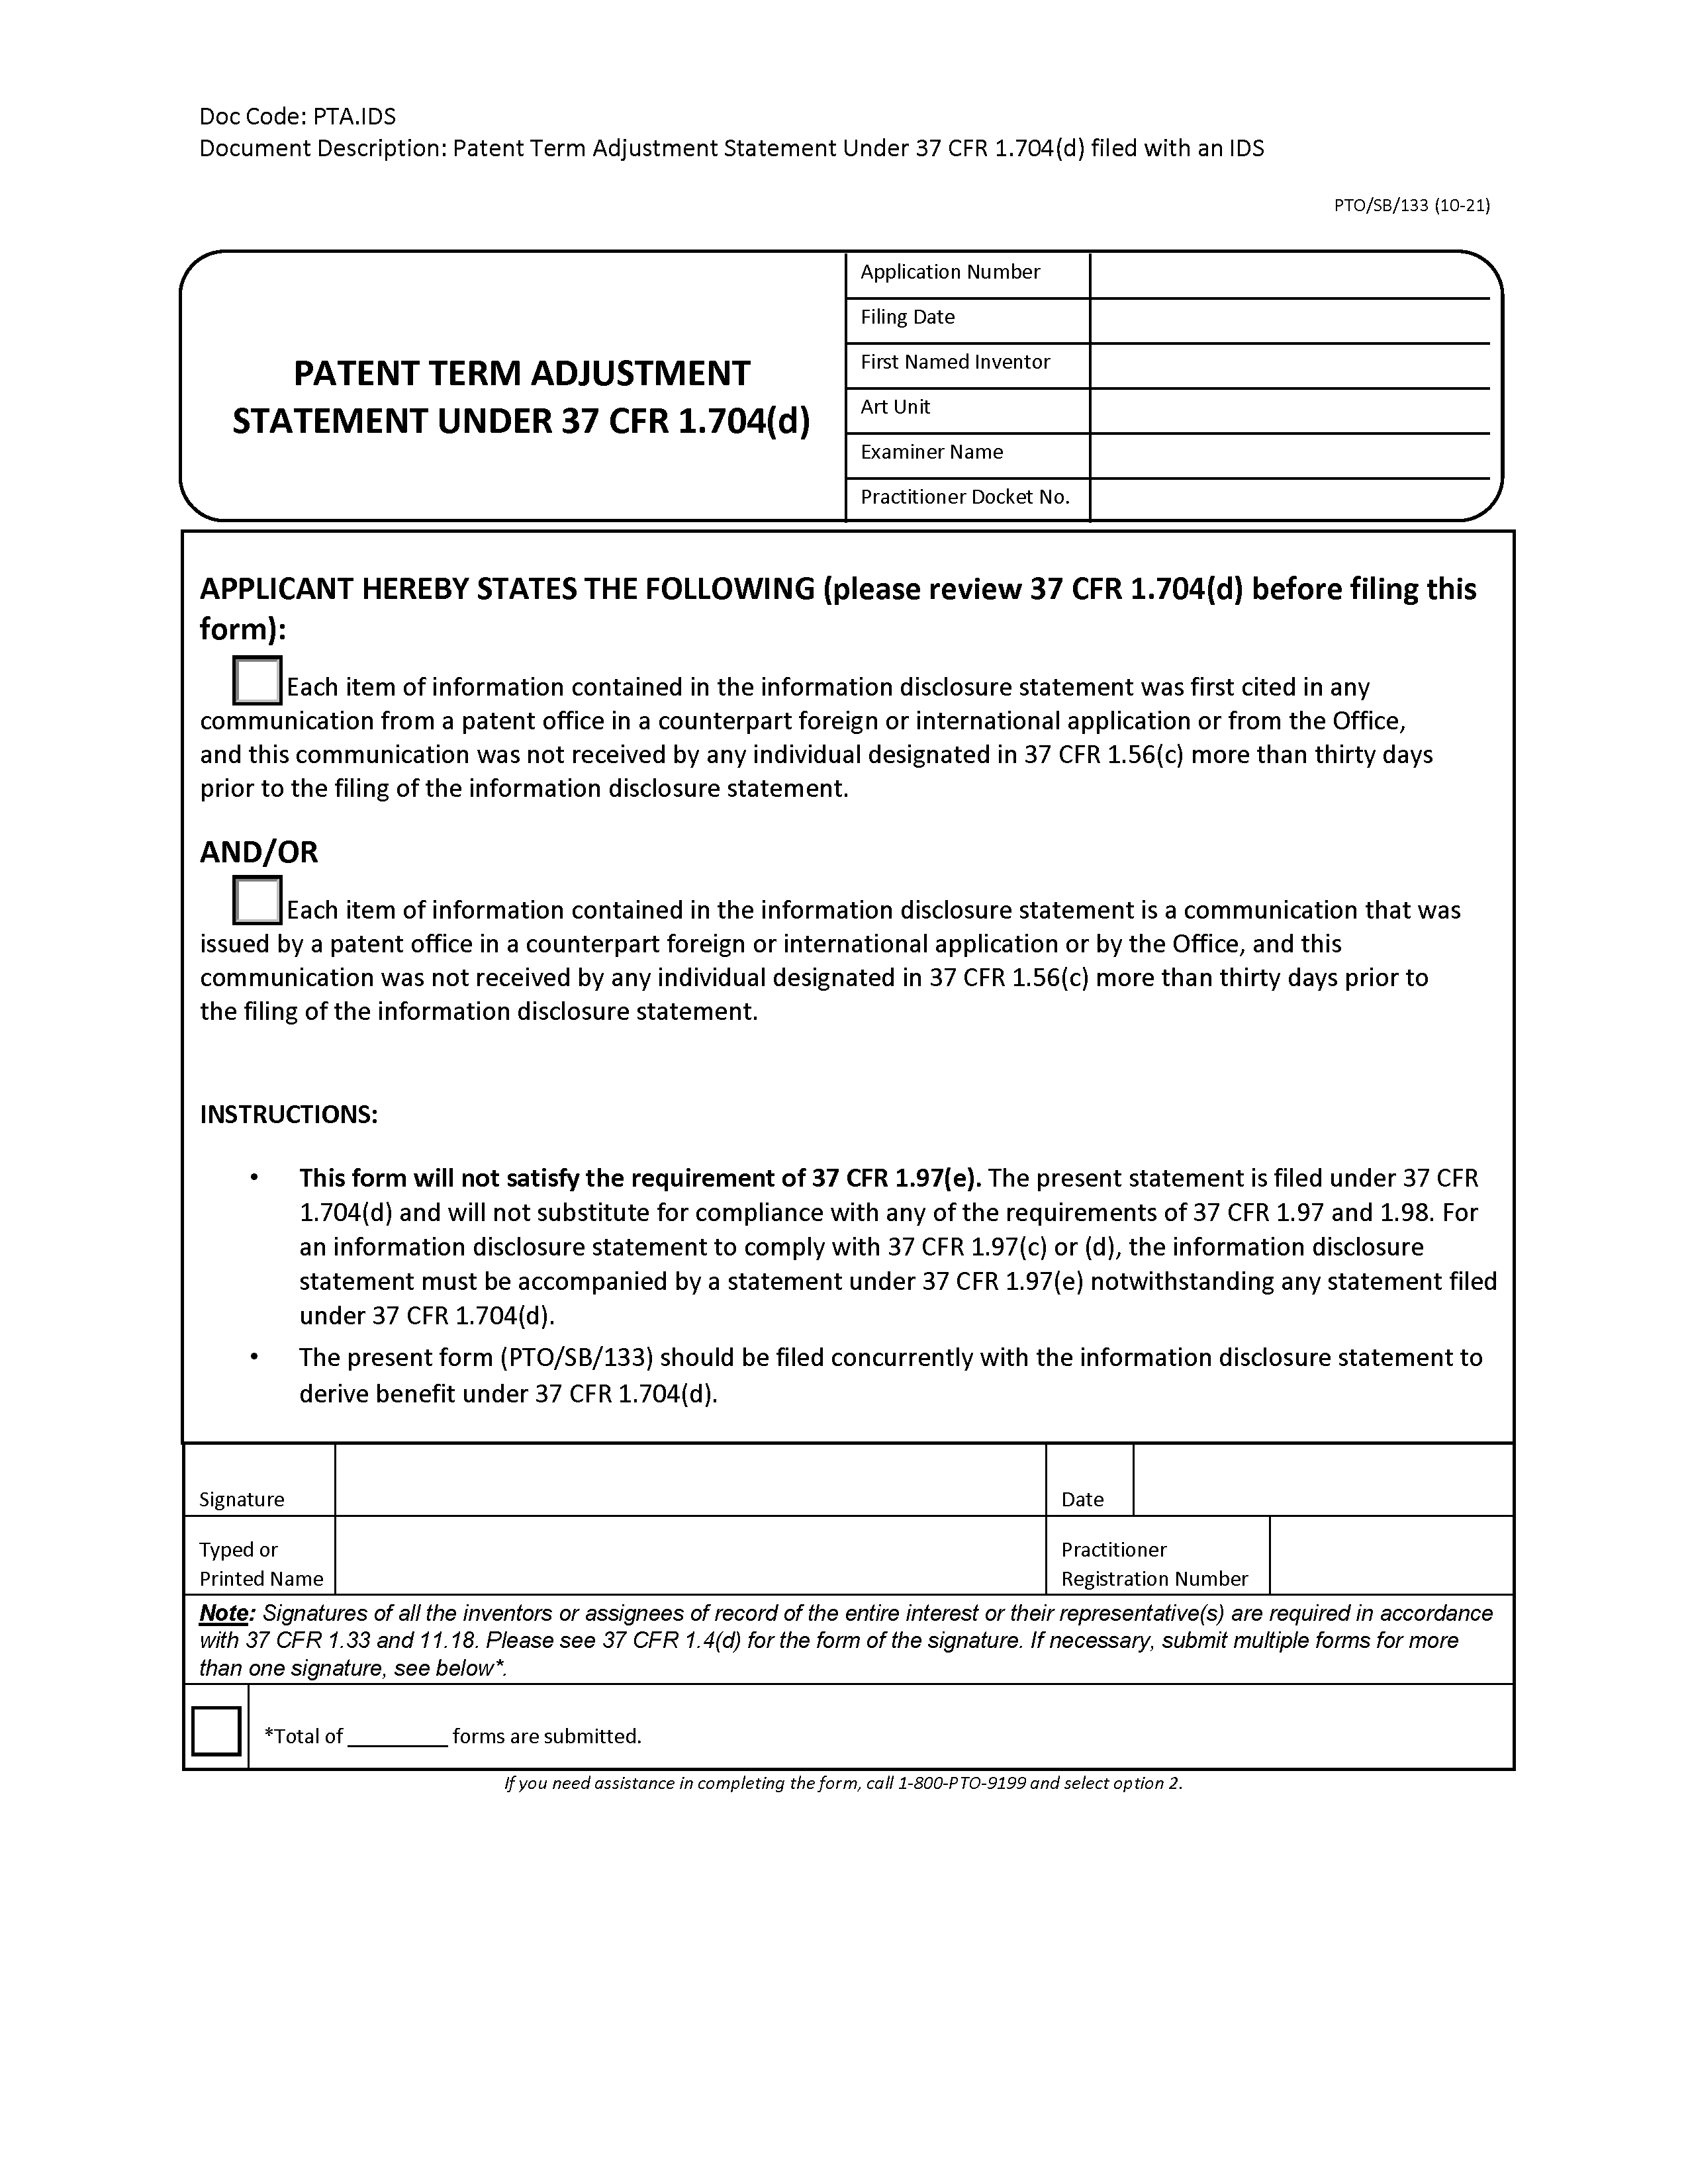 PTO/SB/133 Patent Term Adjustment Statment under 37 CFR 1.704(d), Page 1